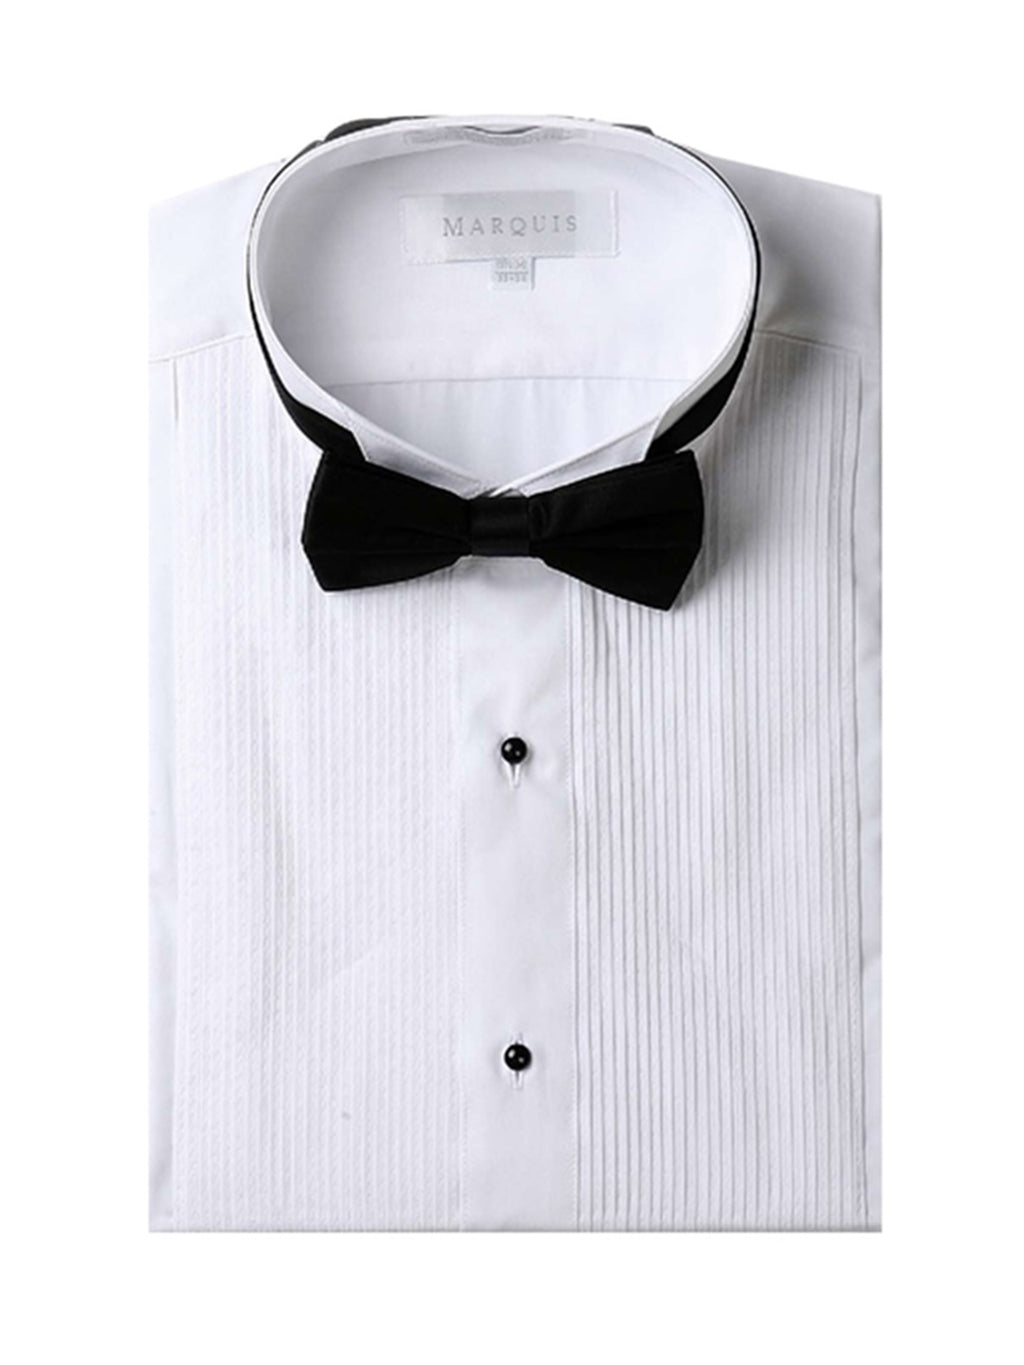 Marquis Men's White Slim Fit Tuxedo Dress Shirt with Black Bow Tie Tuxedo shirt TheDapperTie White Neck-16.5 Sleeve-32-33 